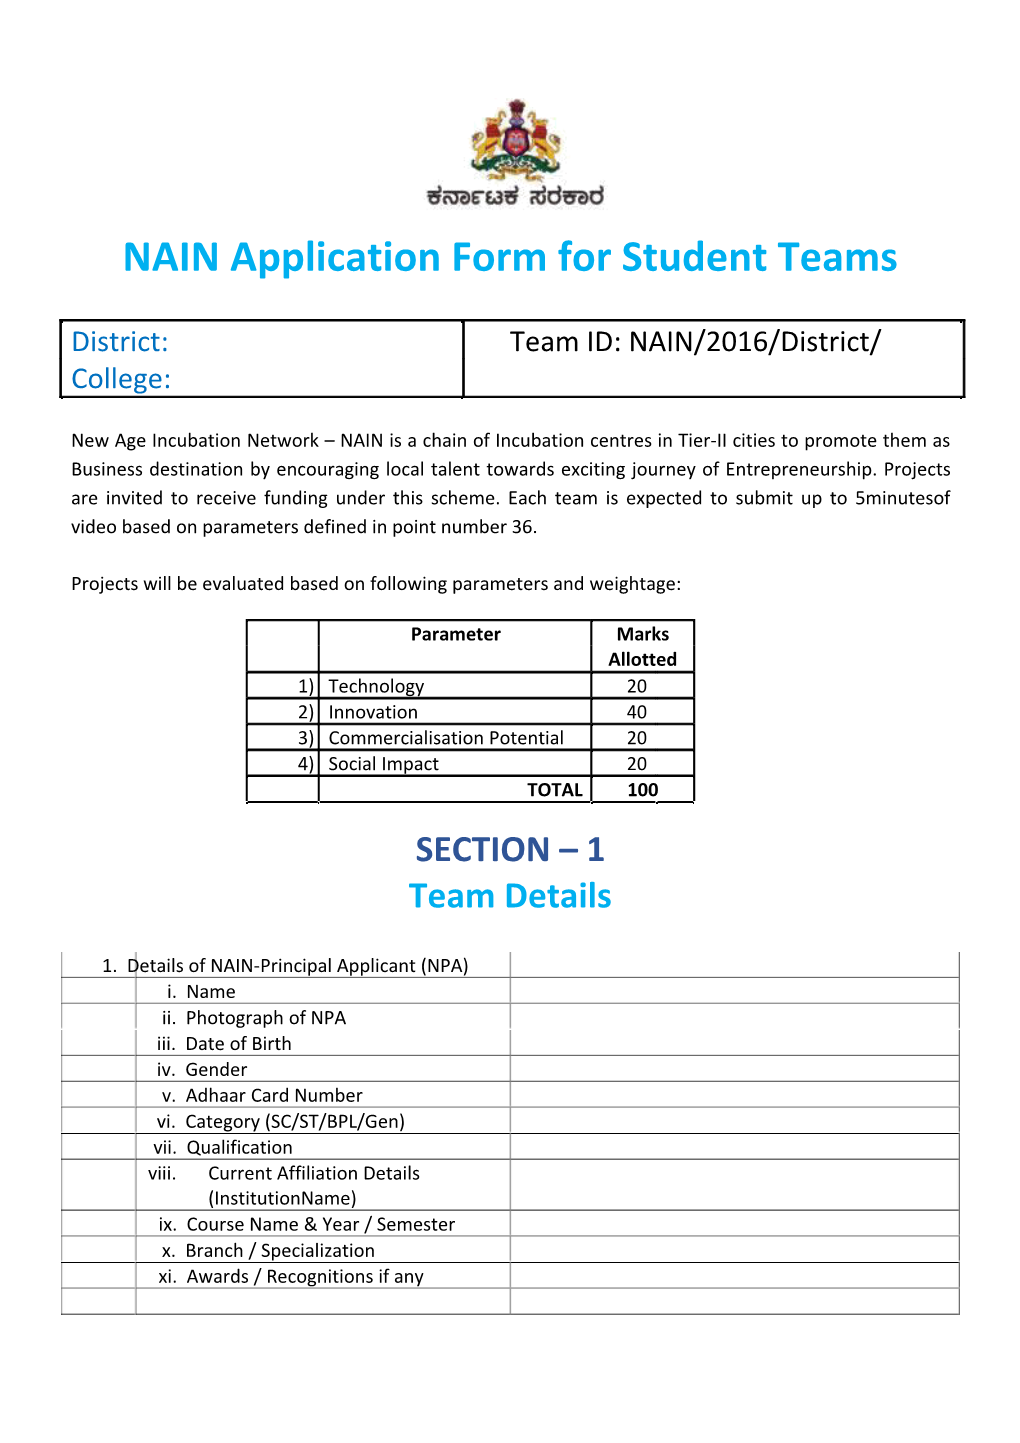 NAIN Application Form for Student Teams